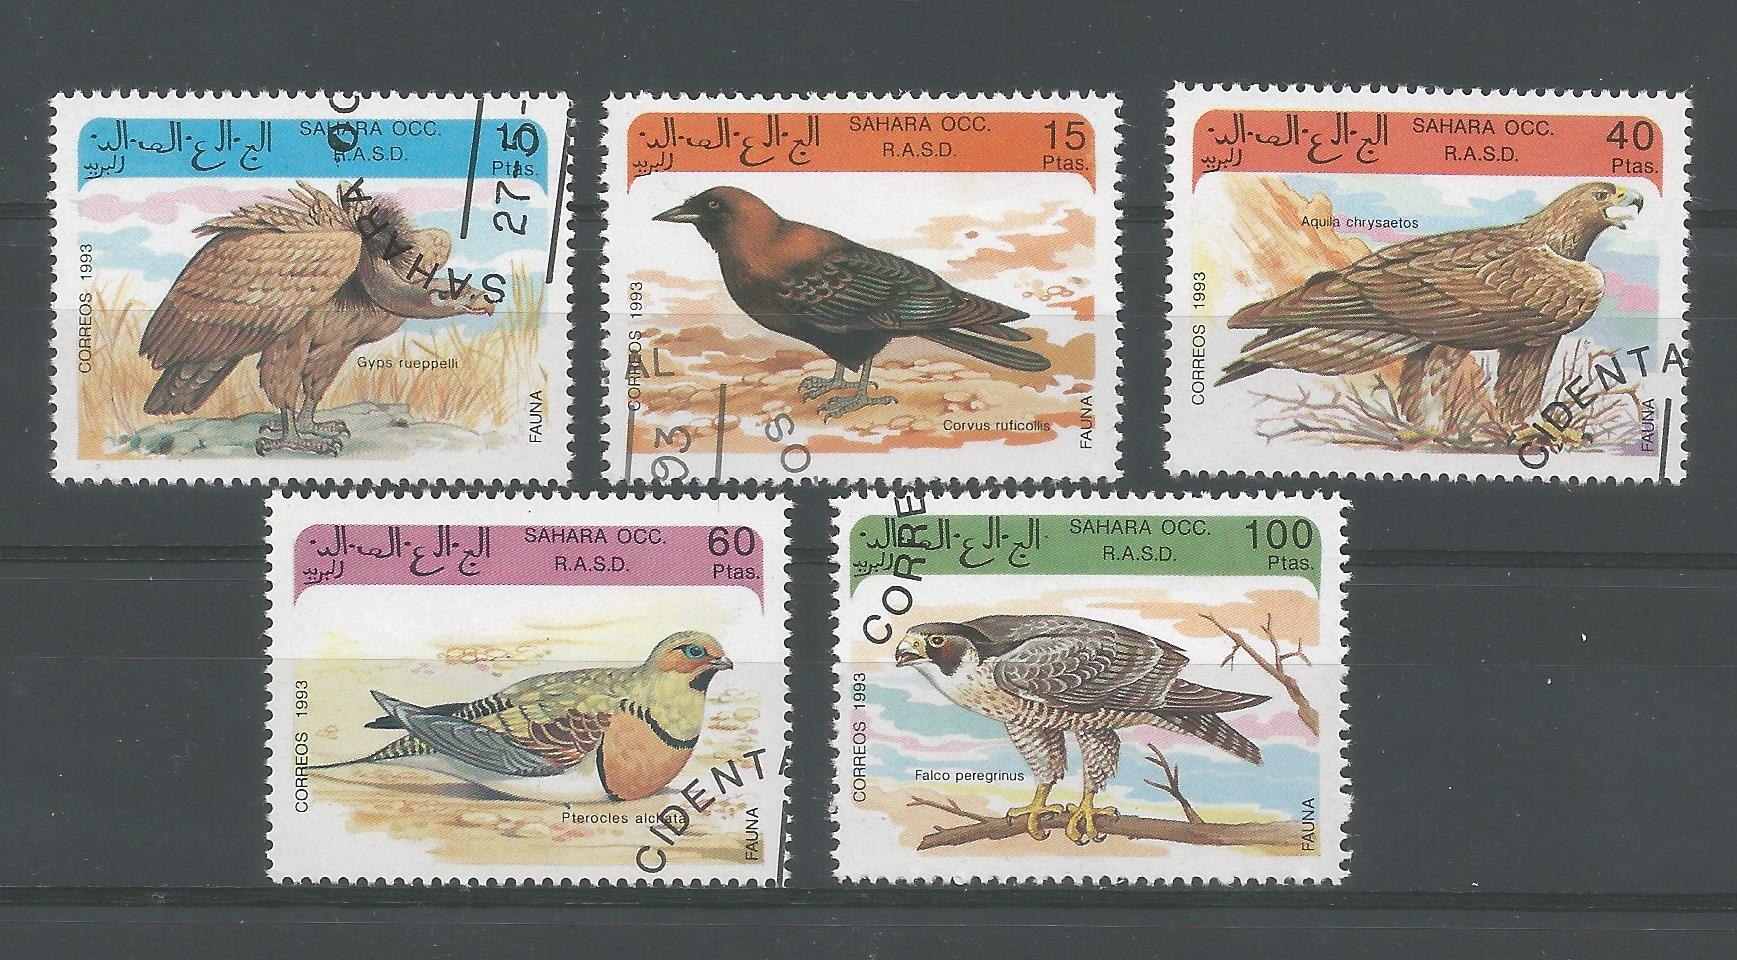 51136 - SAHARA OCCIDENTALE - 1993 - Uccelli - Serie compl. 5 val. timbrati - (SAH005)